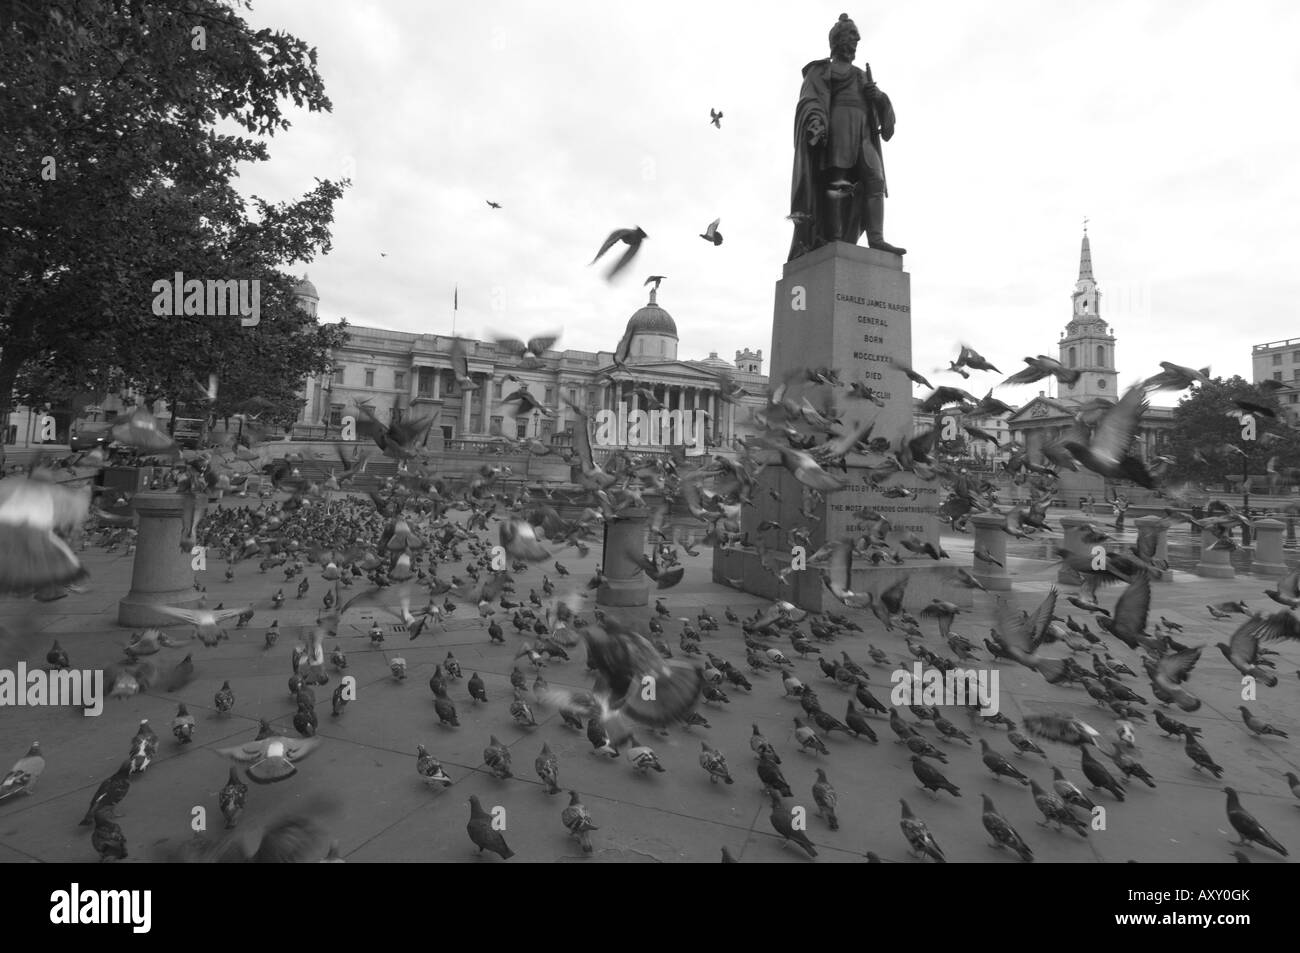 Flocks of pigeons in Trafalgar Square, London, England, United Kingdom, Europe Stock Photo